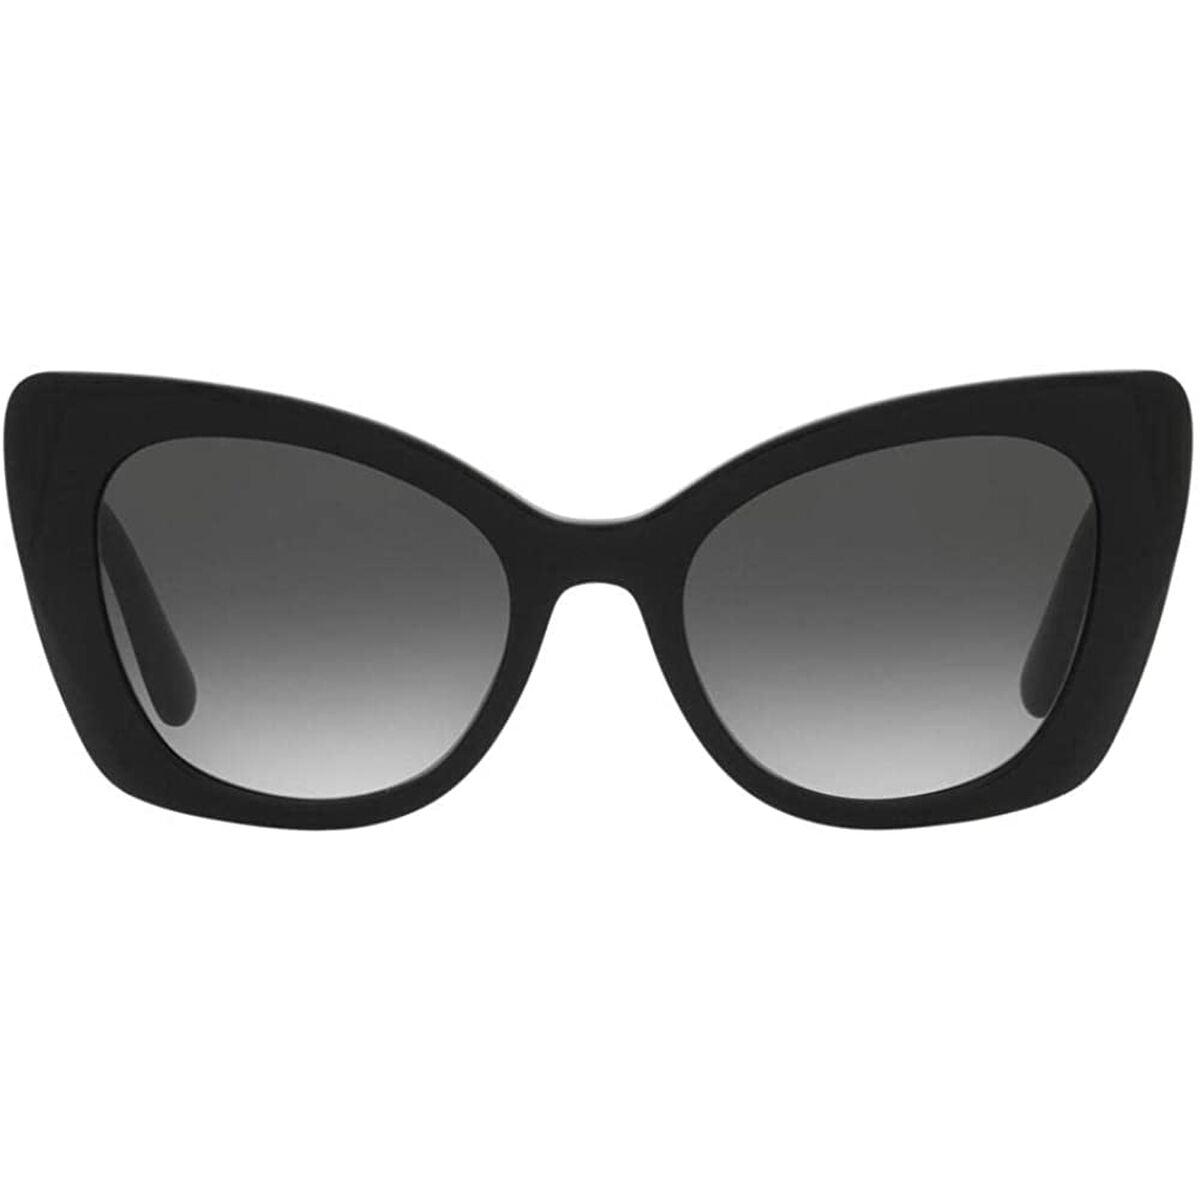 Stejl Interessant angst Dolce & Gabbana Ladies' Sunglasses Dg 4405 in Black | Lyst